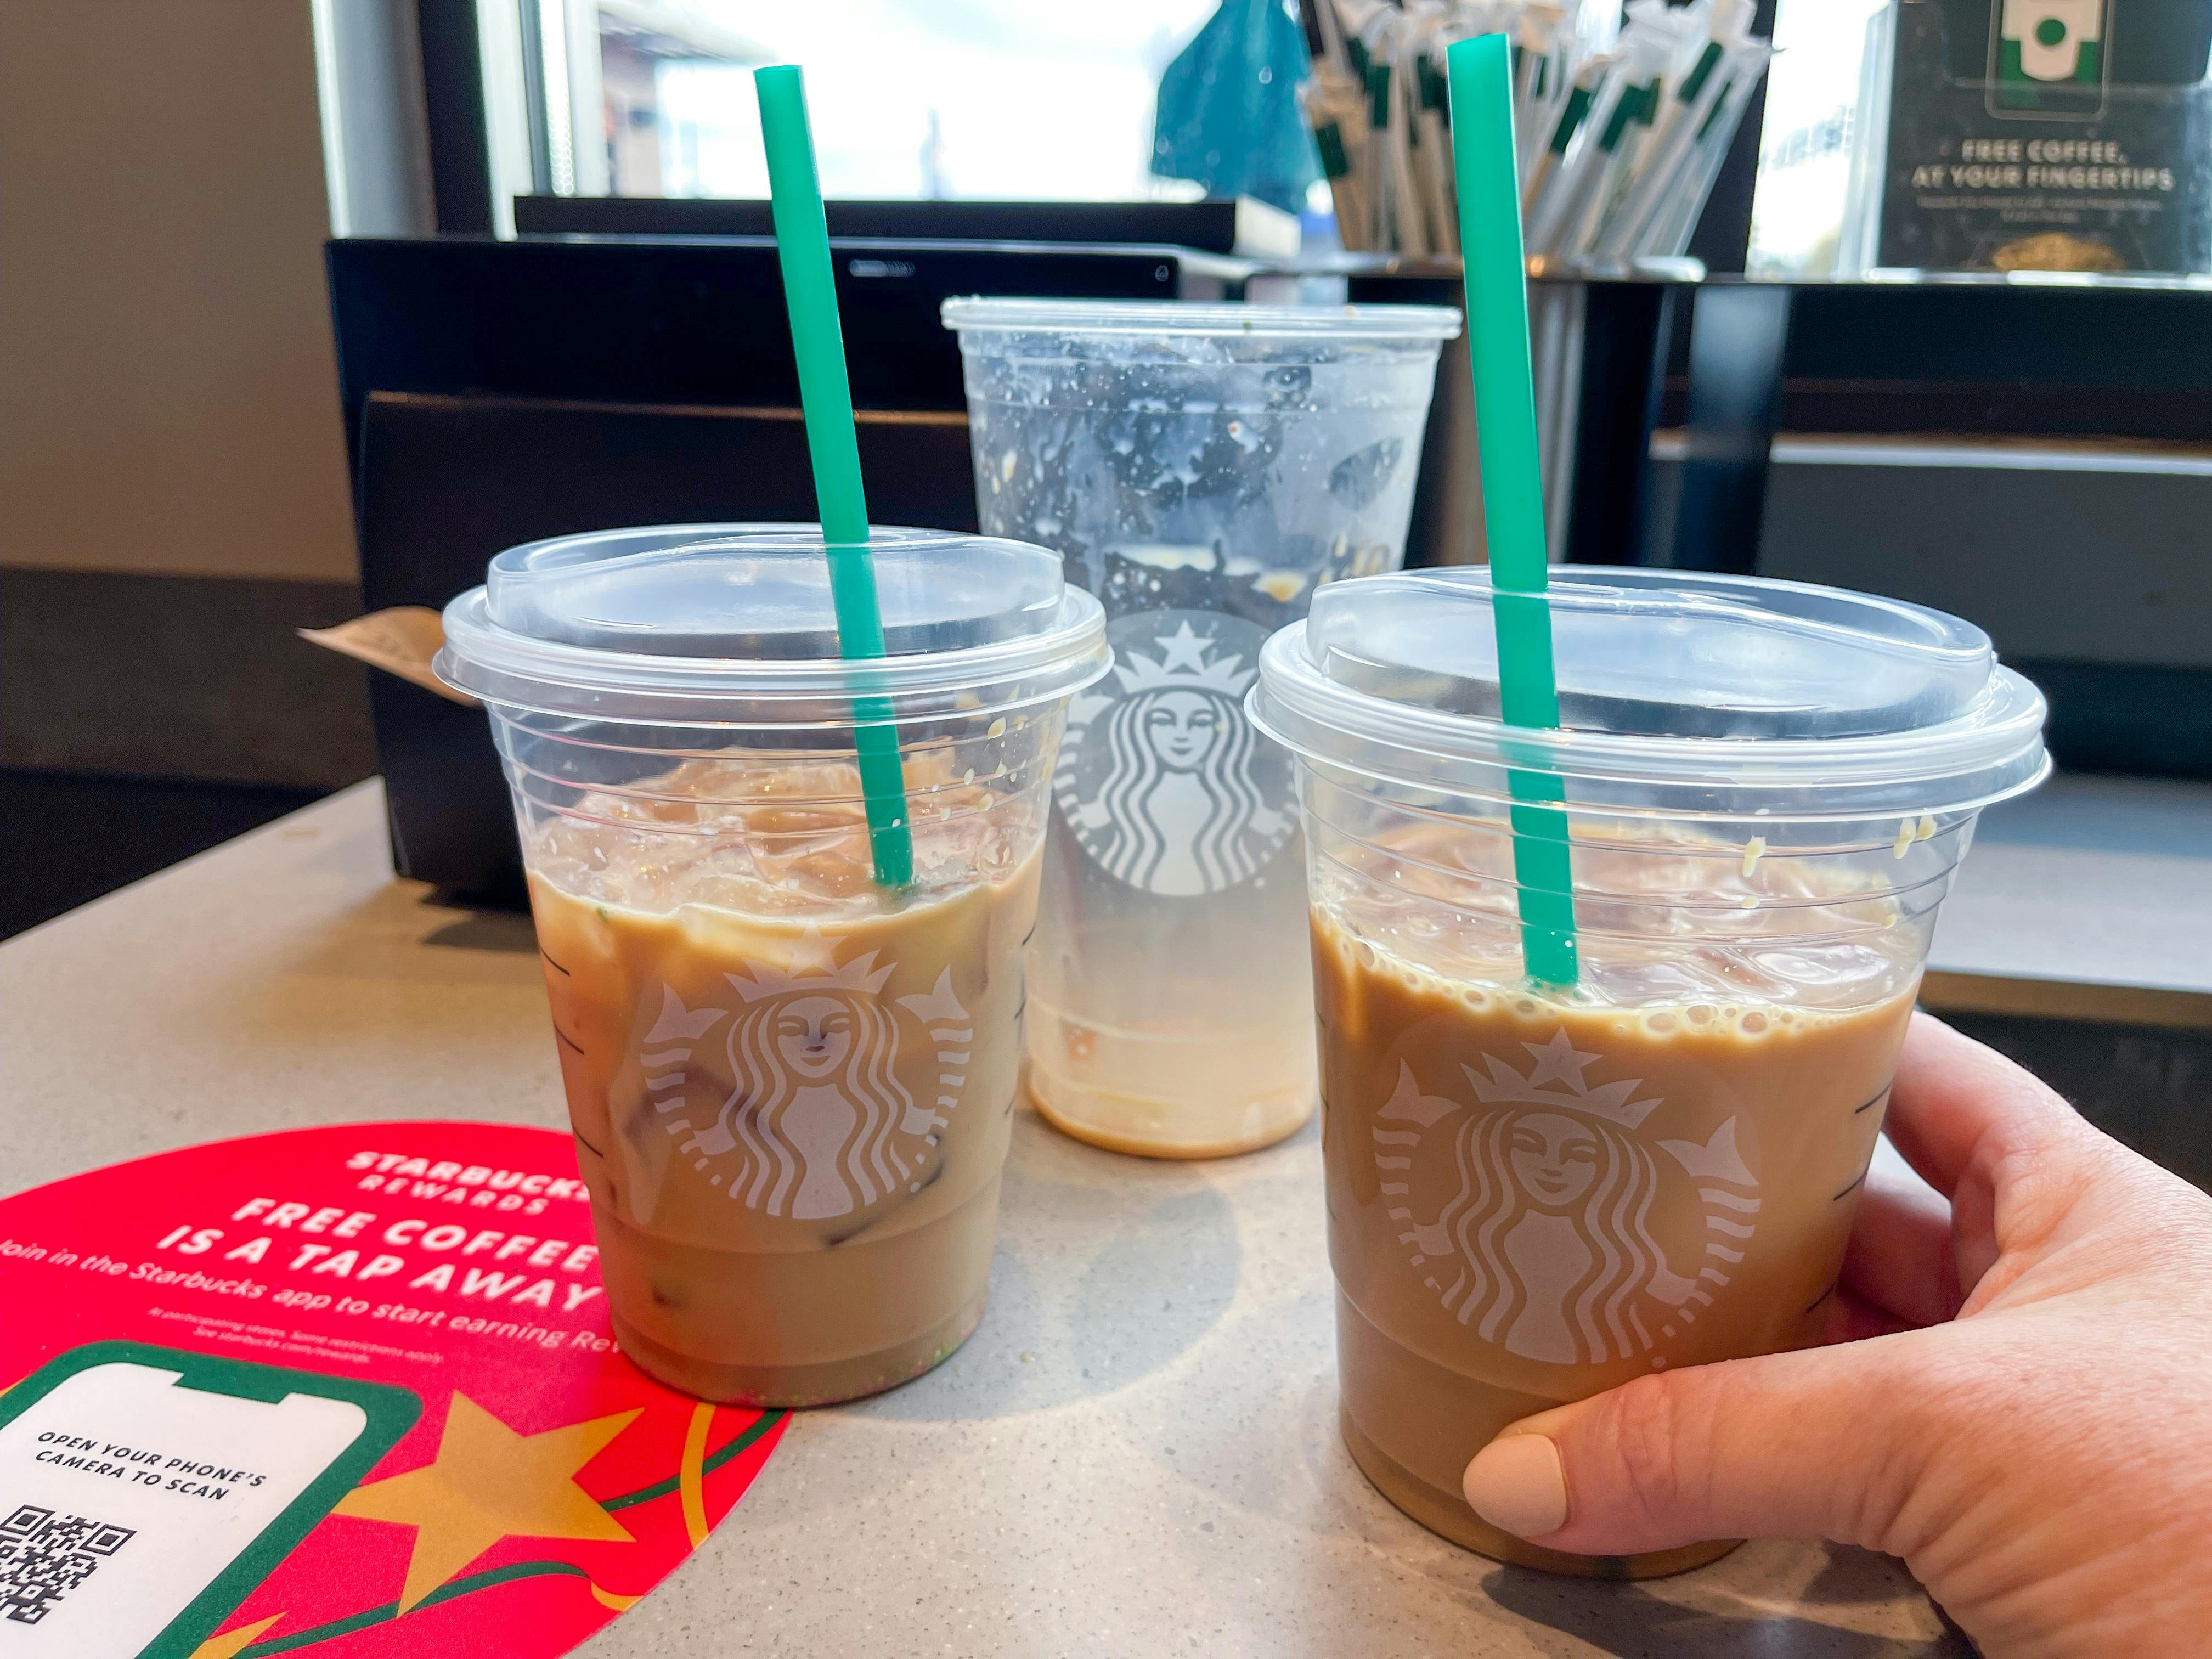 A venti Starbucks iced coffee split into two tall cups.